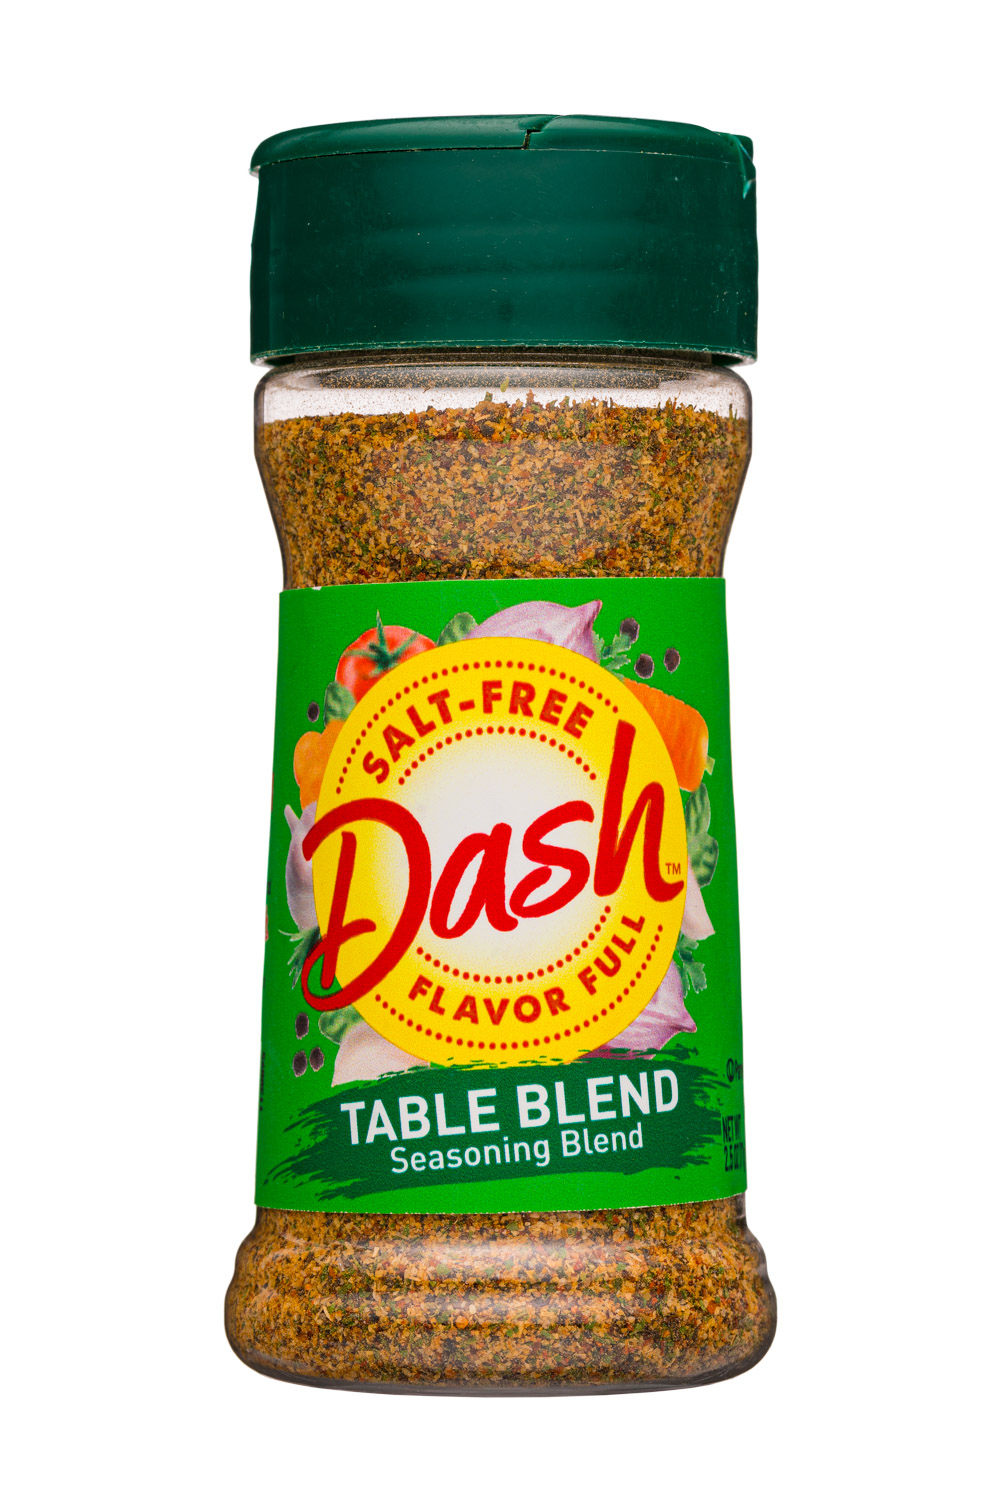 https://images.nosh.com/brands/316241107.dash-2020-seasoning-tableblend.jpg